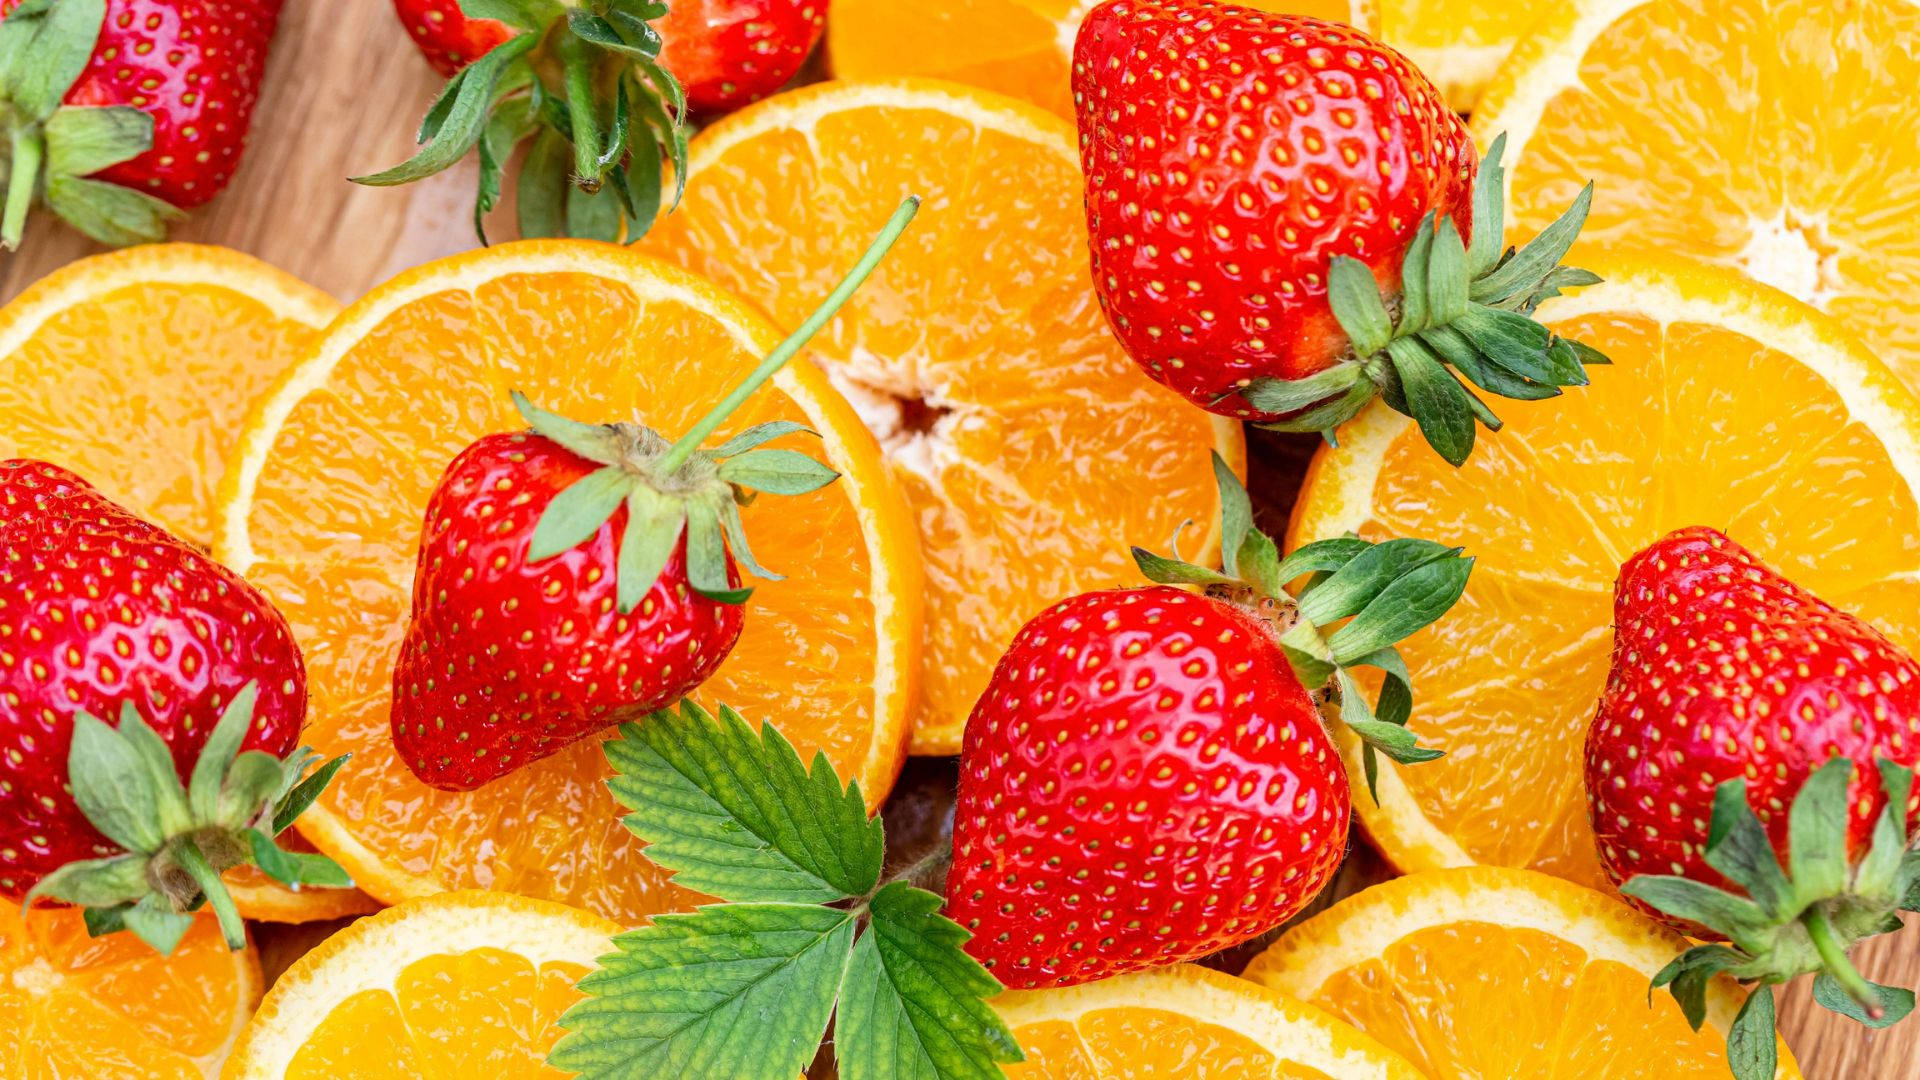 Caption: Fresh Orange Fruits With Ripe Red Strawberries